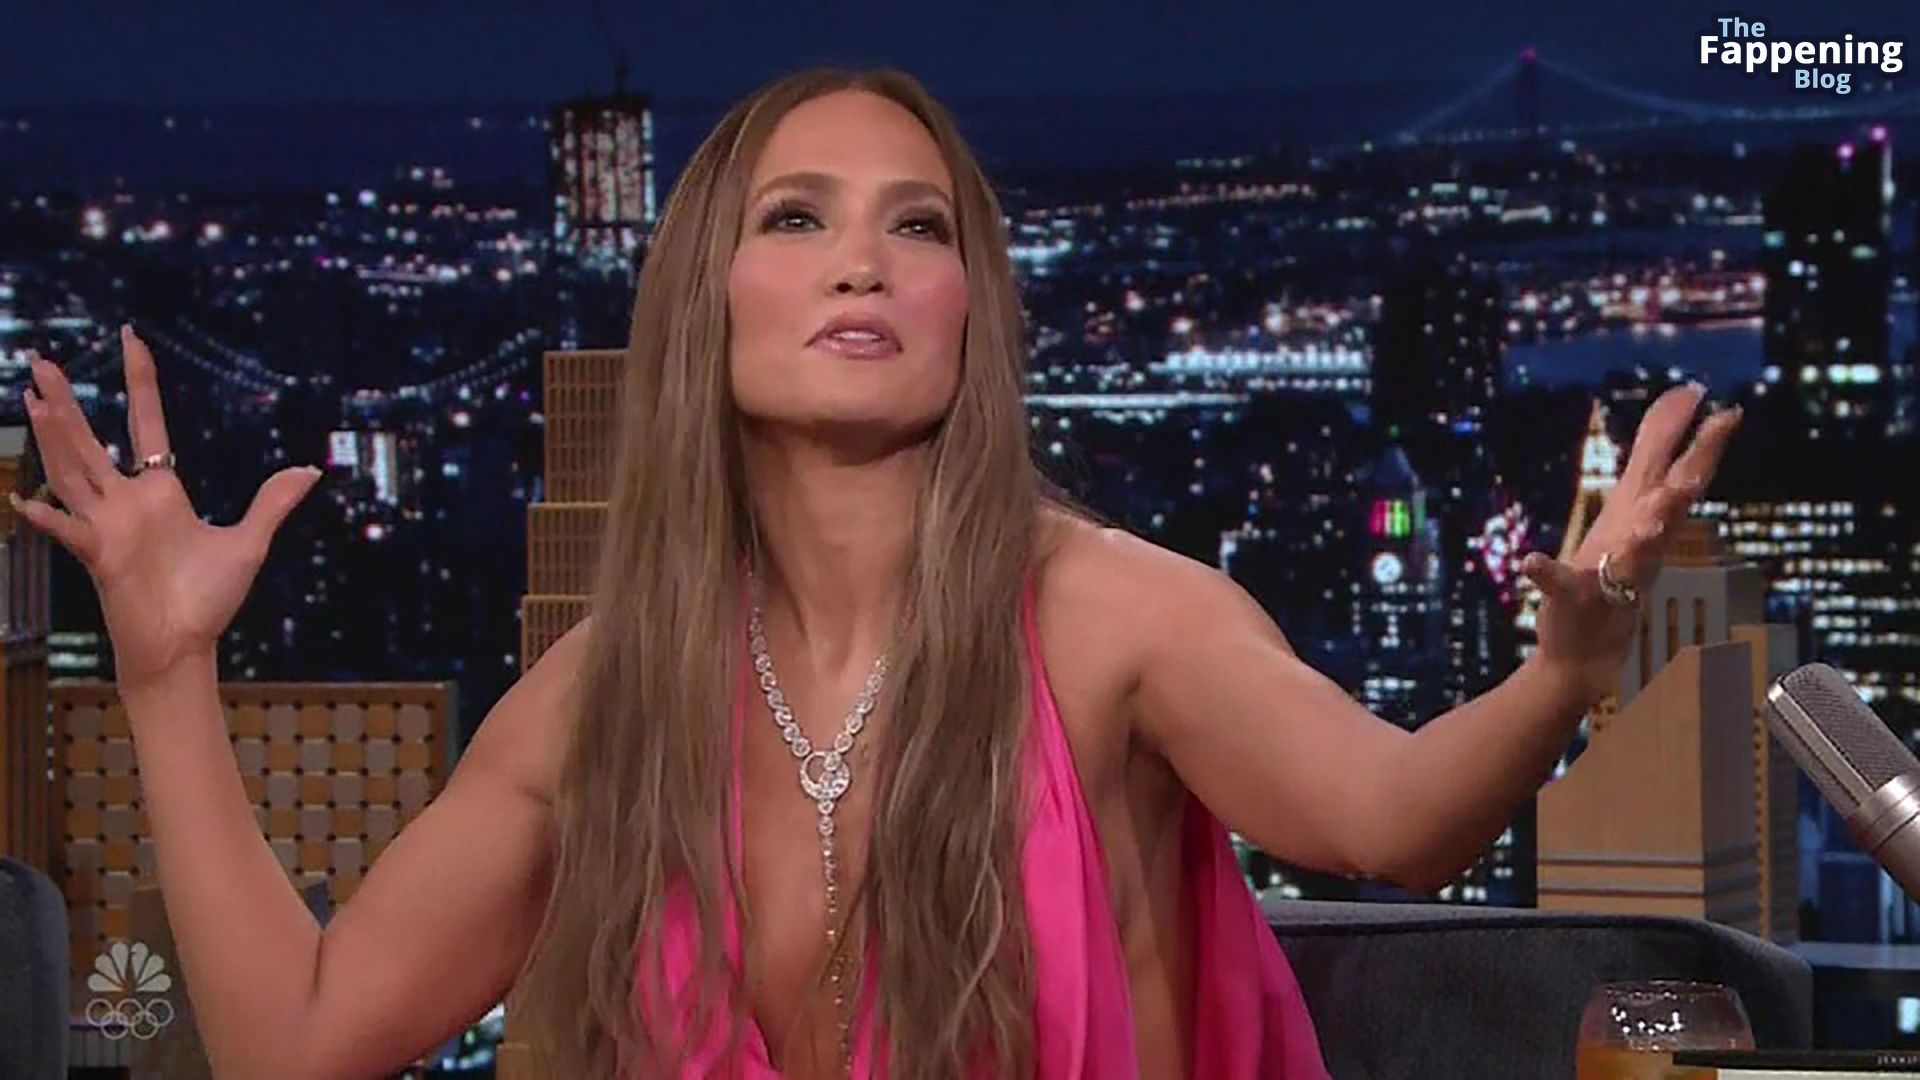 Jennifer-Lopez-Sexy-68-The-Fappening-Blog-1.jpg